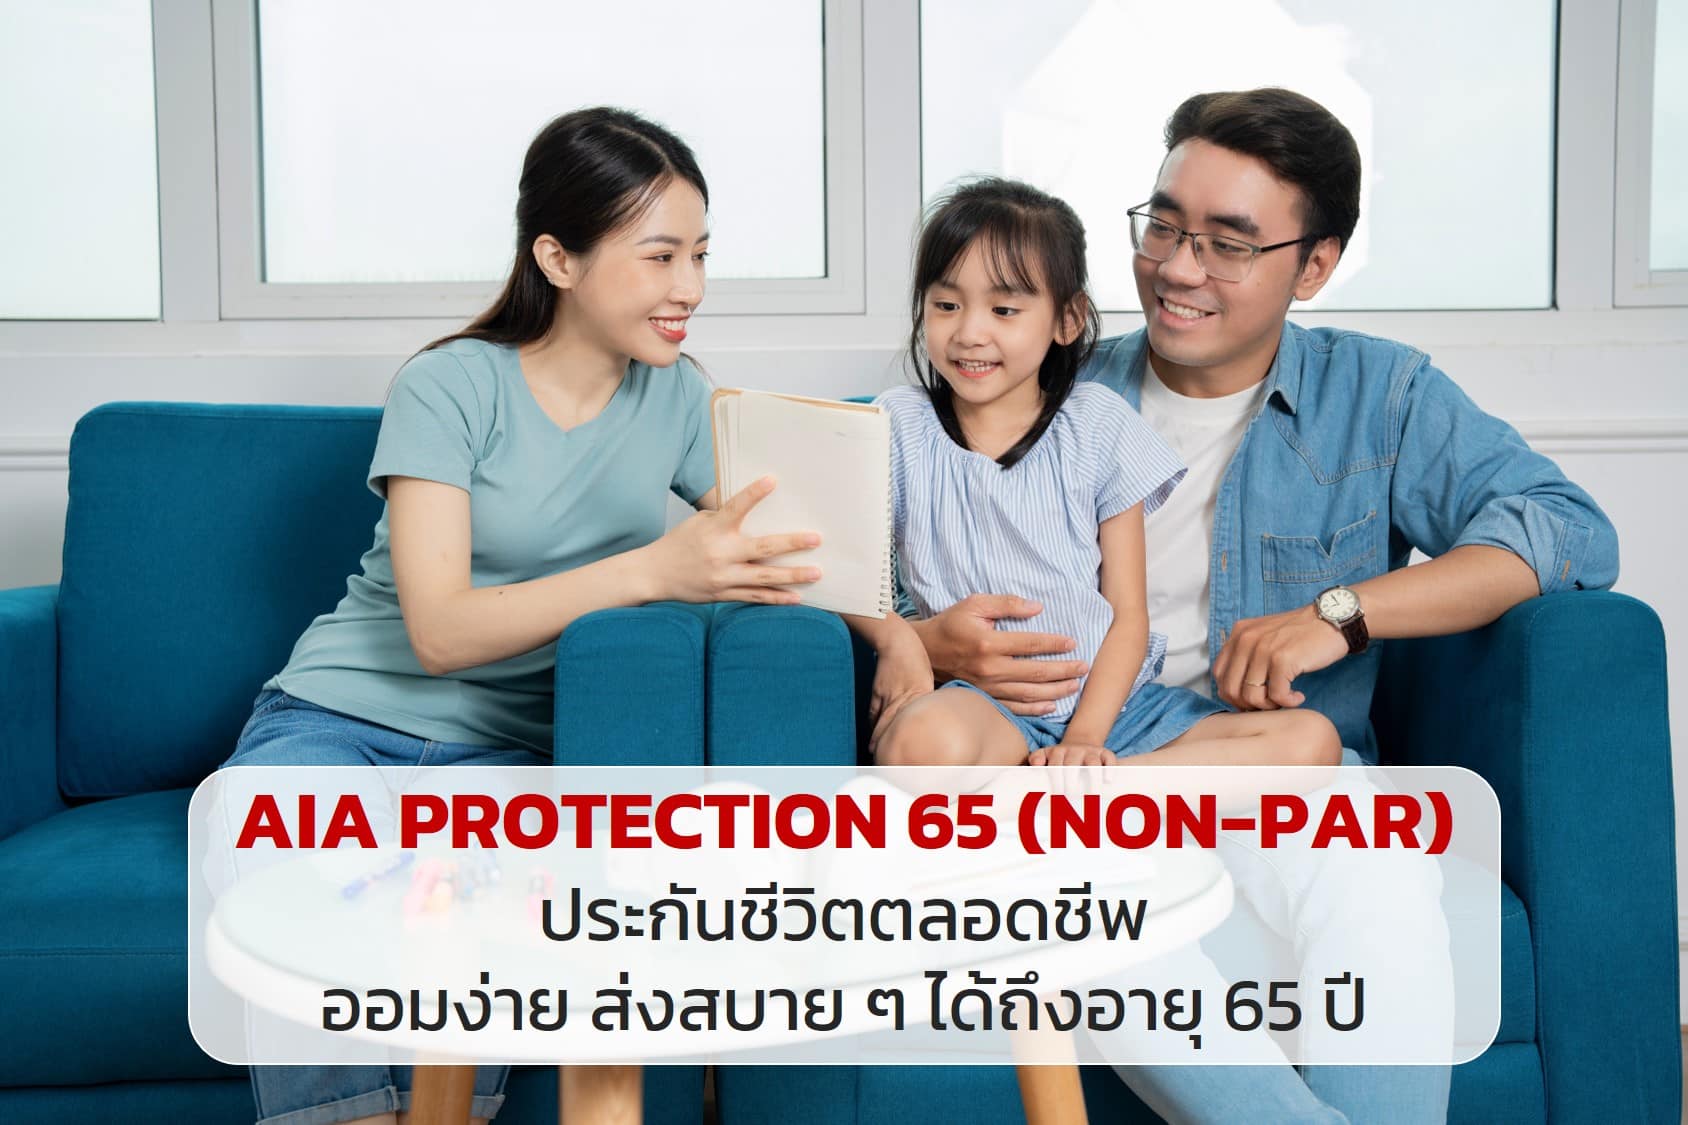 AIA PROTECTION 65 (NON-PAR) ออมง่าย ส่งสบาย ๆ ได้ถึงอายุ 65 ปี